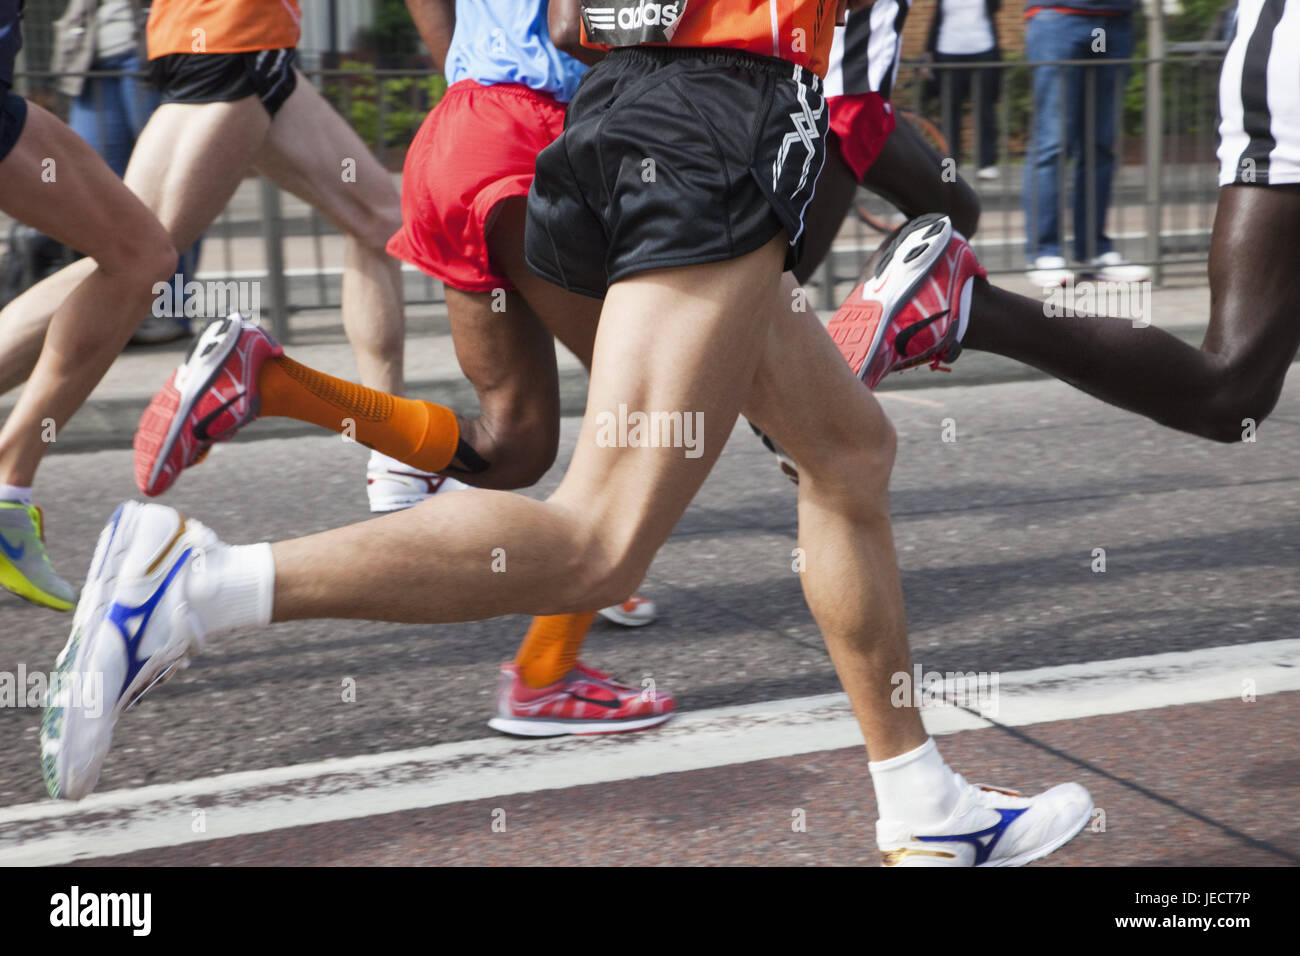 England, London, London marathon, marathon runner, town, marathon, sport, run, feet, bones, group, runner, participant, athlete, events, Stock Photo